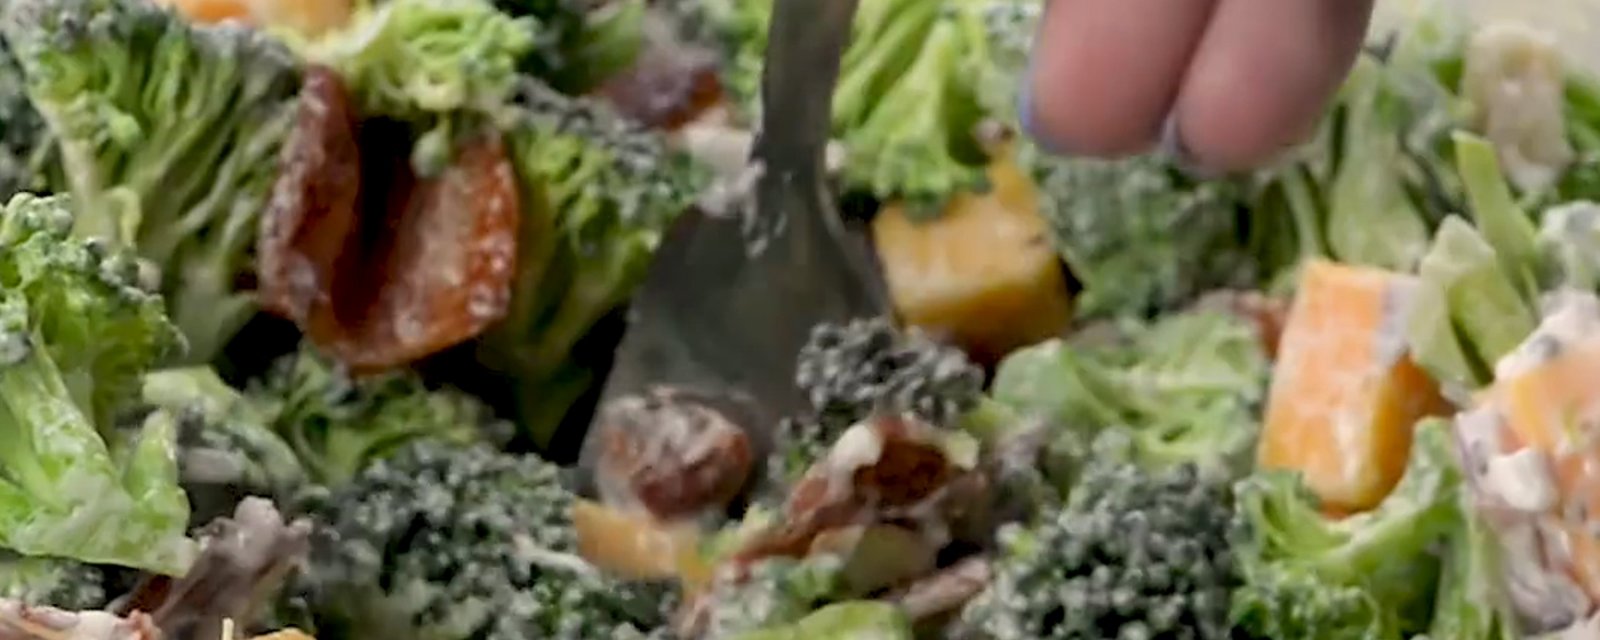 Salade de brocoli ranch, faible en glucides